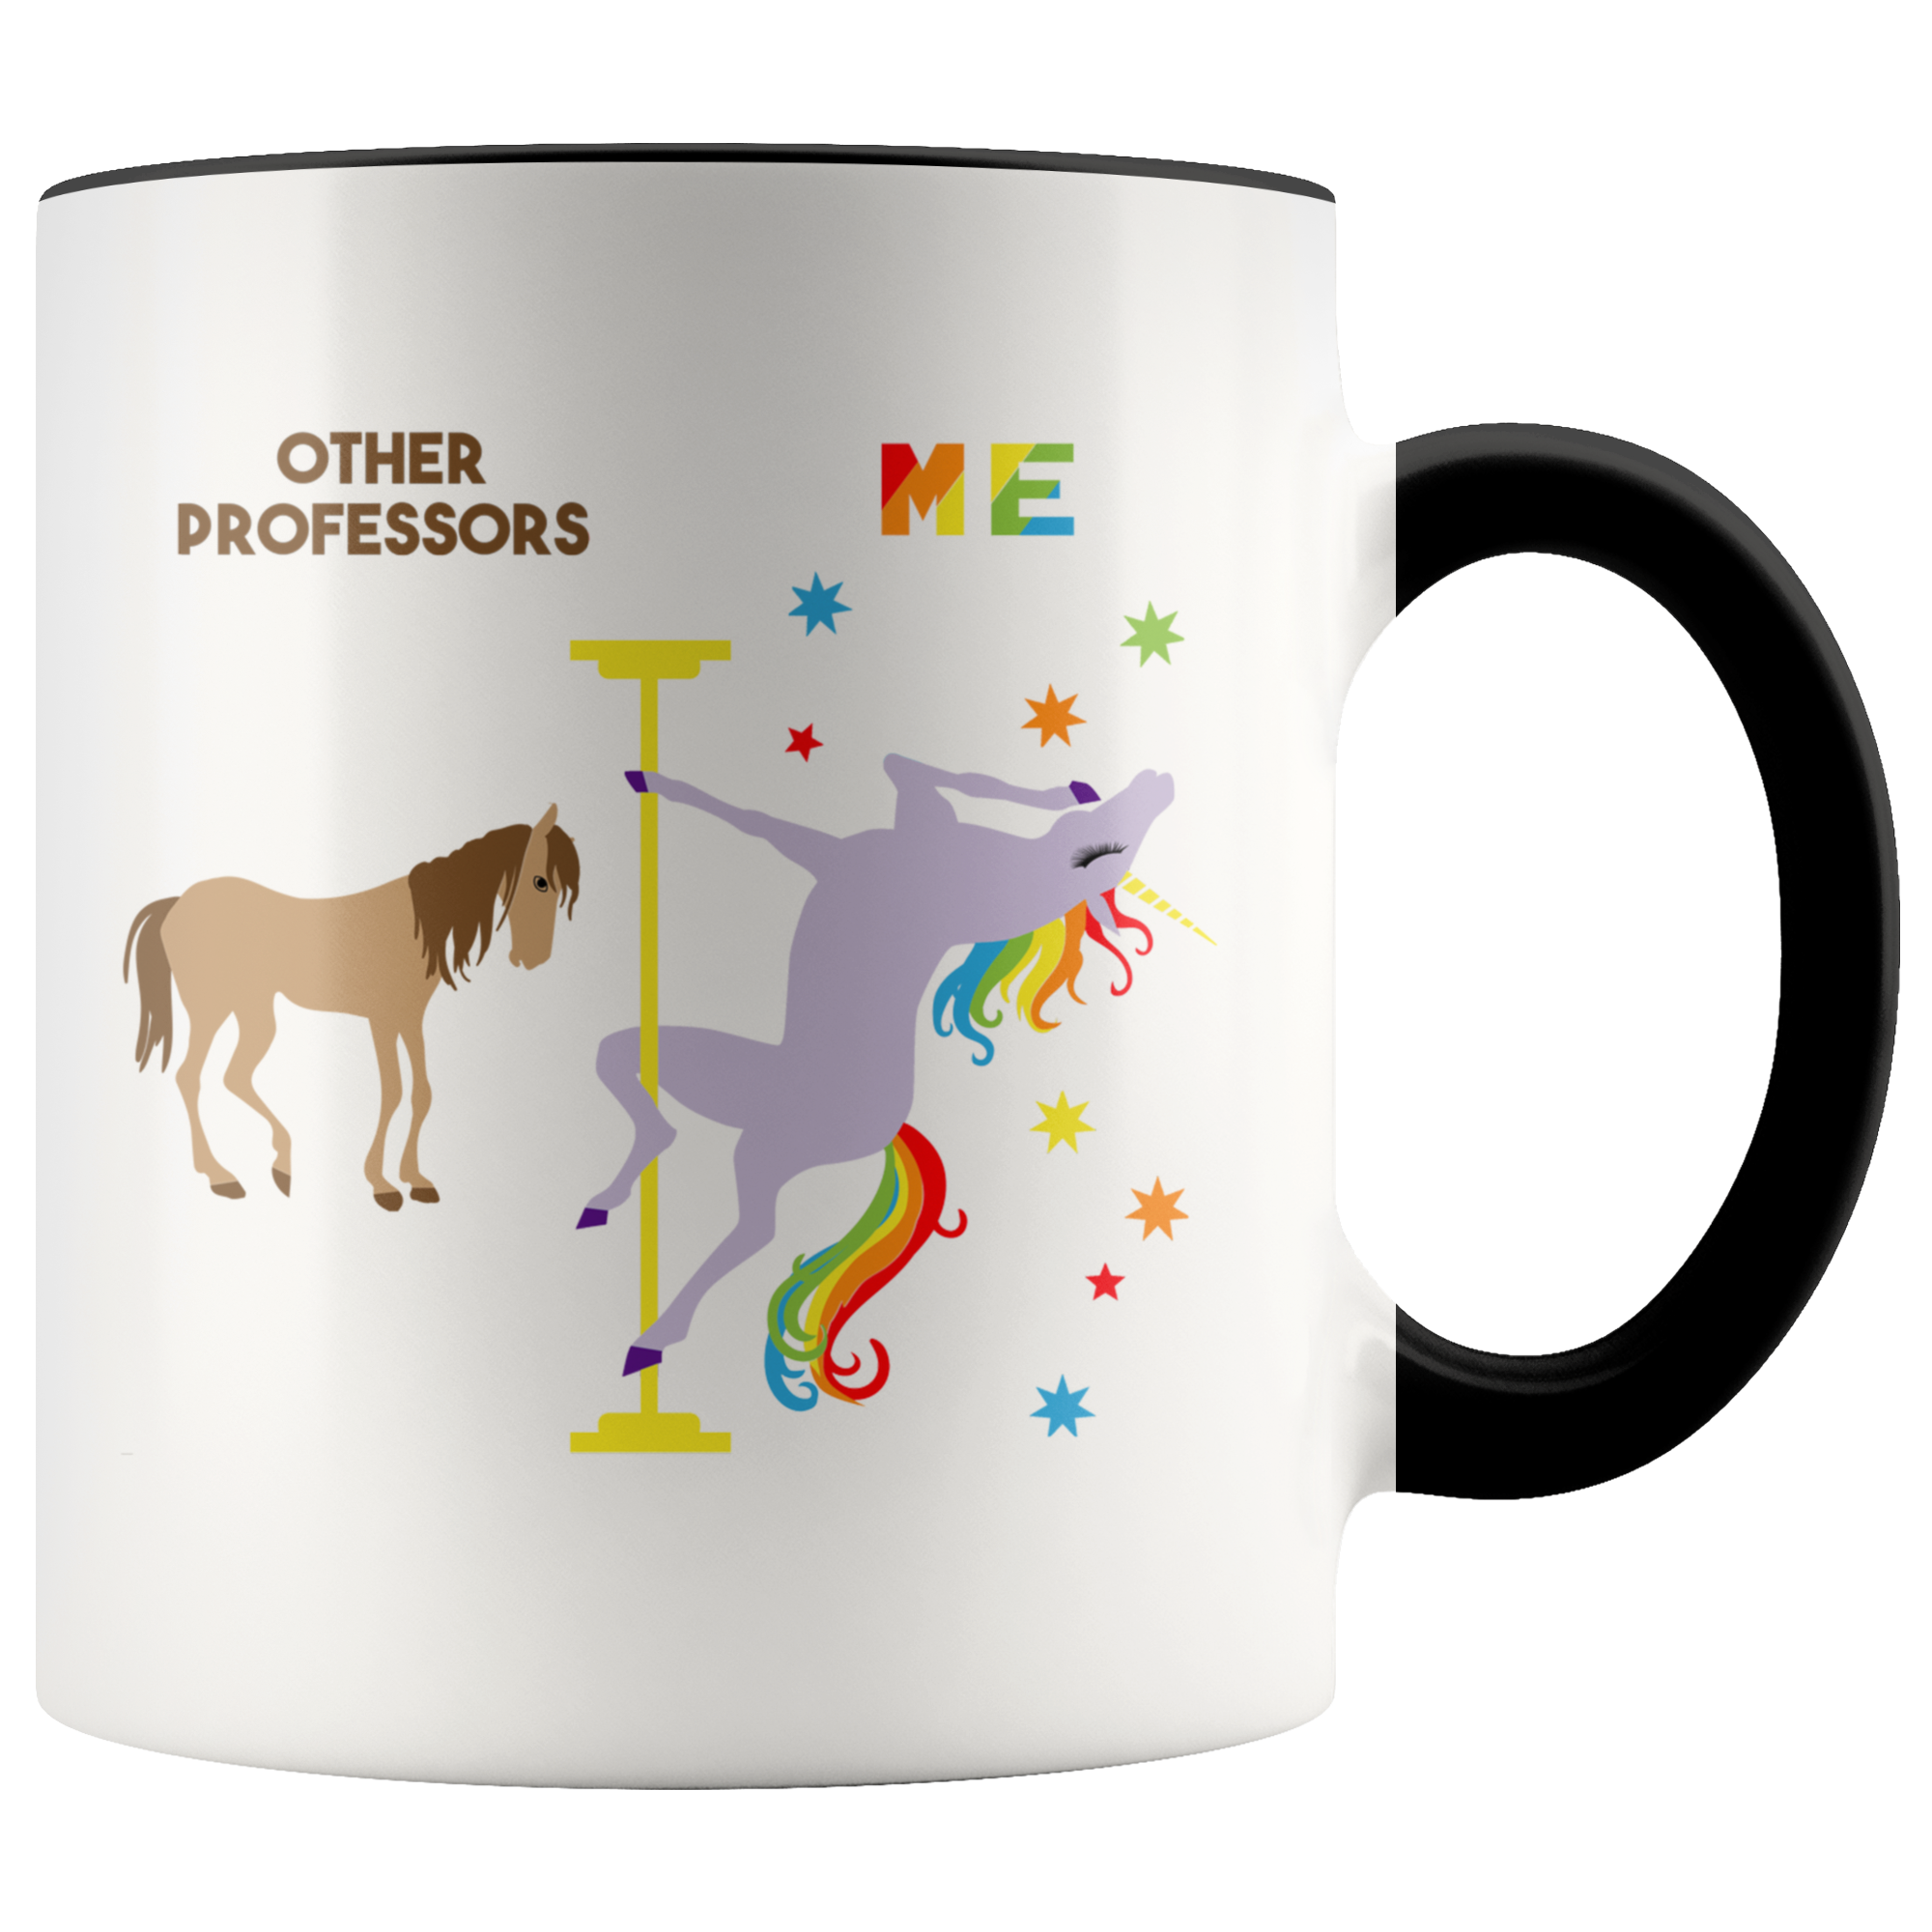 College Professor Gifts for Professors Pole Dancing Unicorn Mug Funny Rainbow Coffee Cup